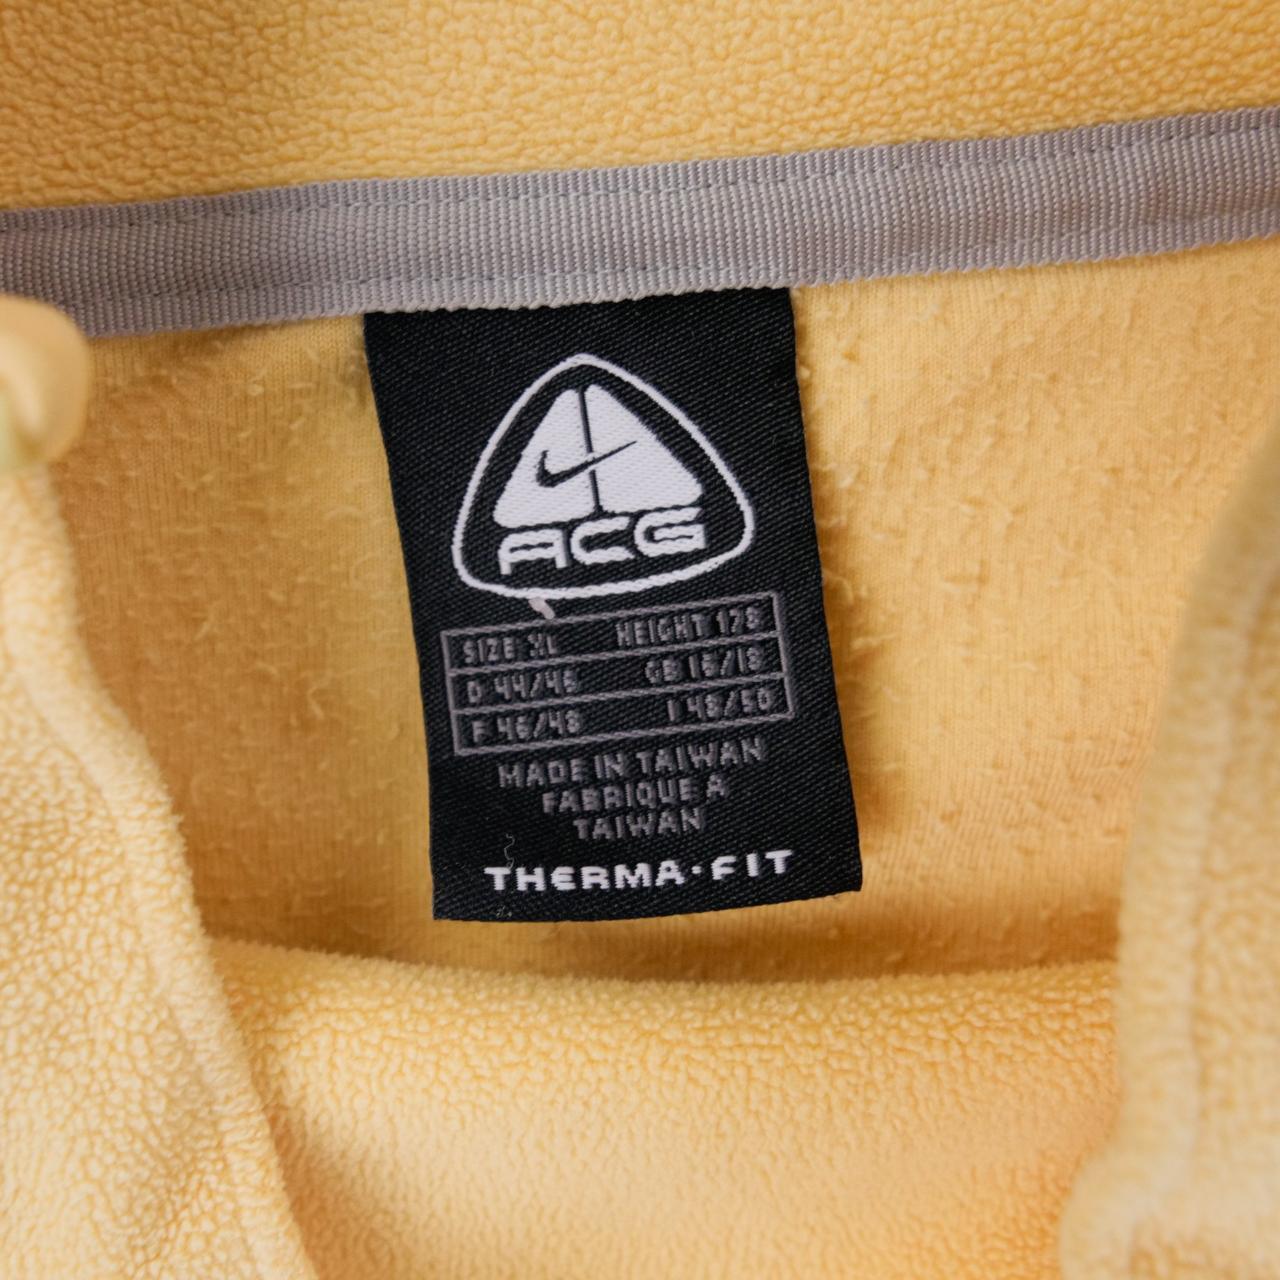 Vintage Nike ACG Fleece Size L - Known Source